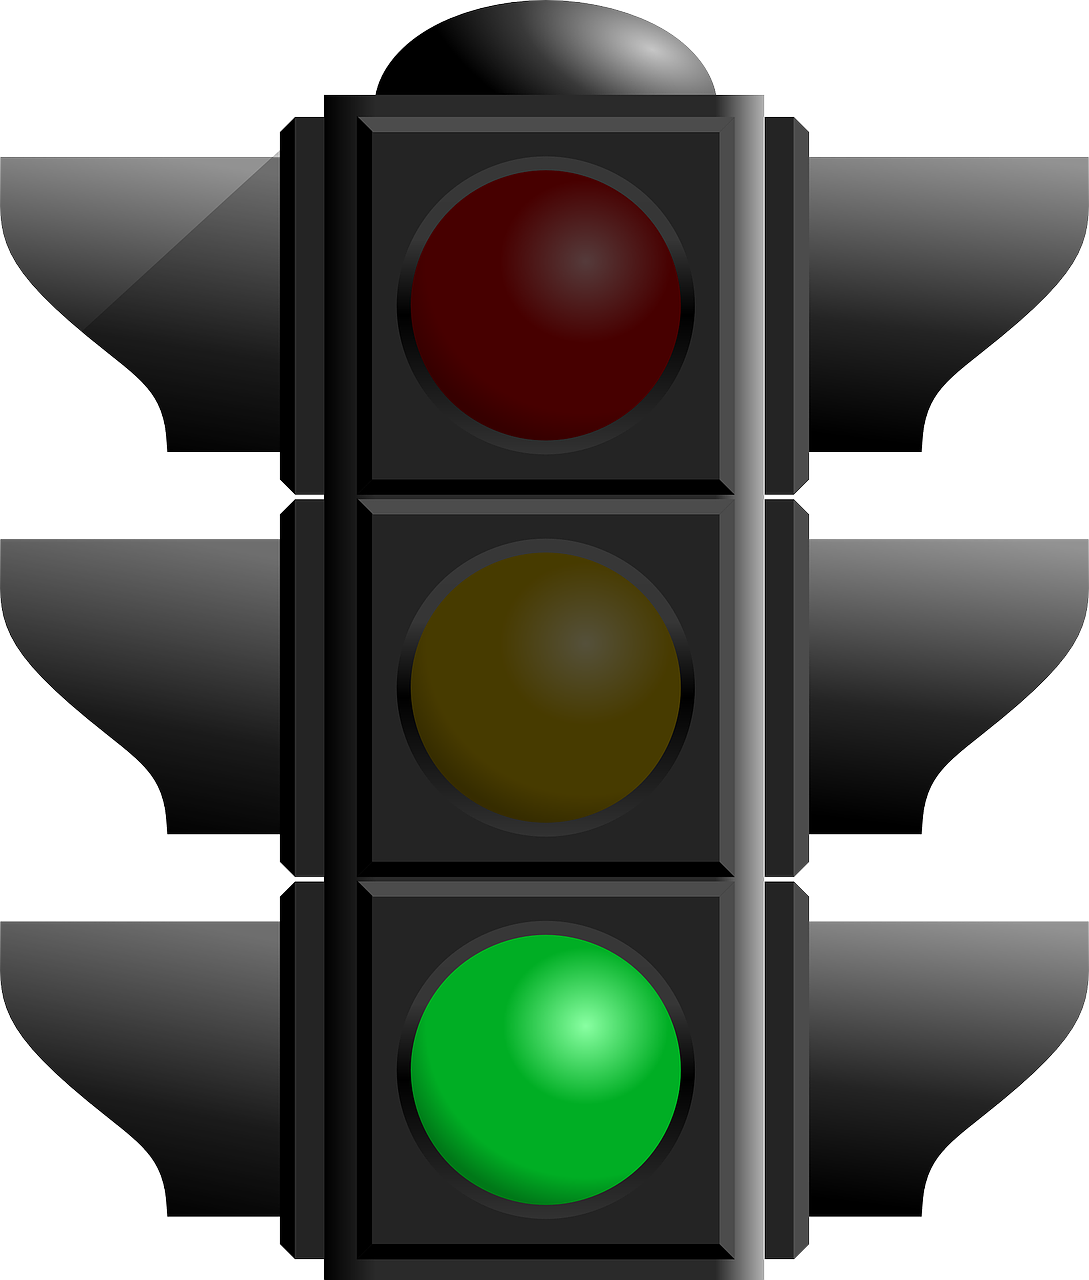 green light traffic light signals free photo